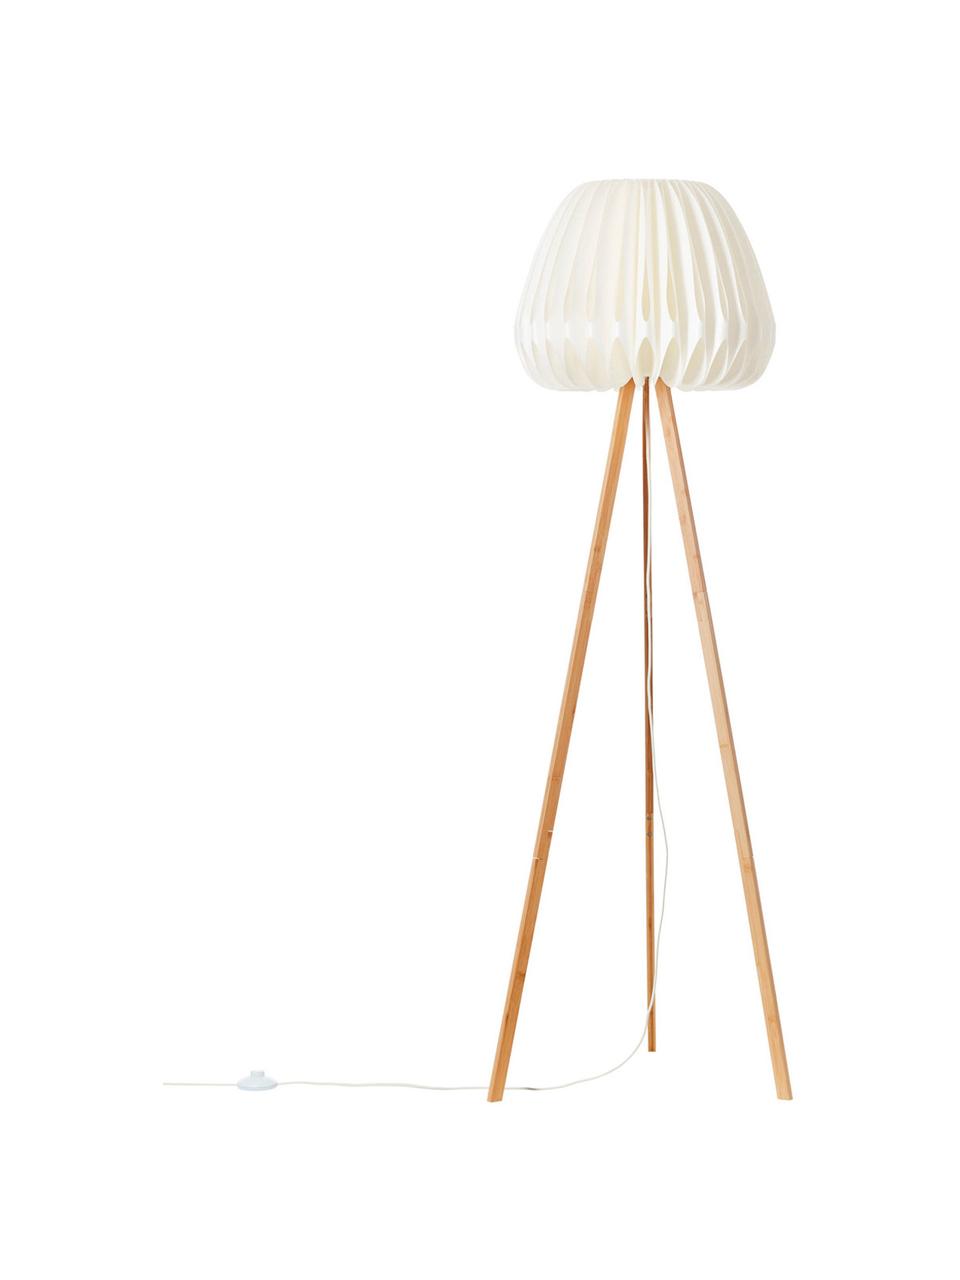 Designová stojací lampa z bambusu Inna, Bílá, bambus